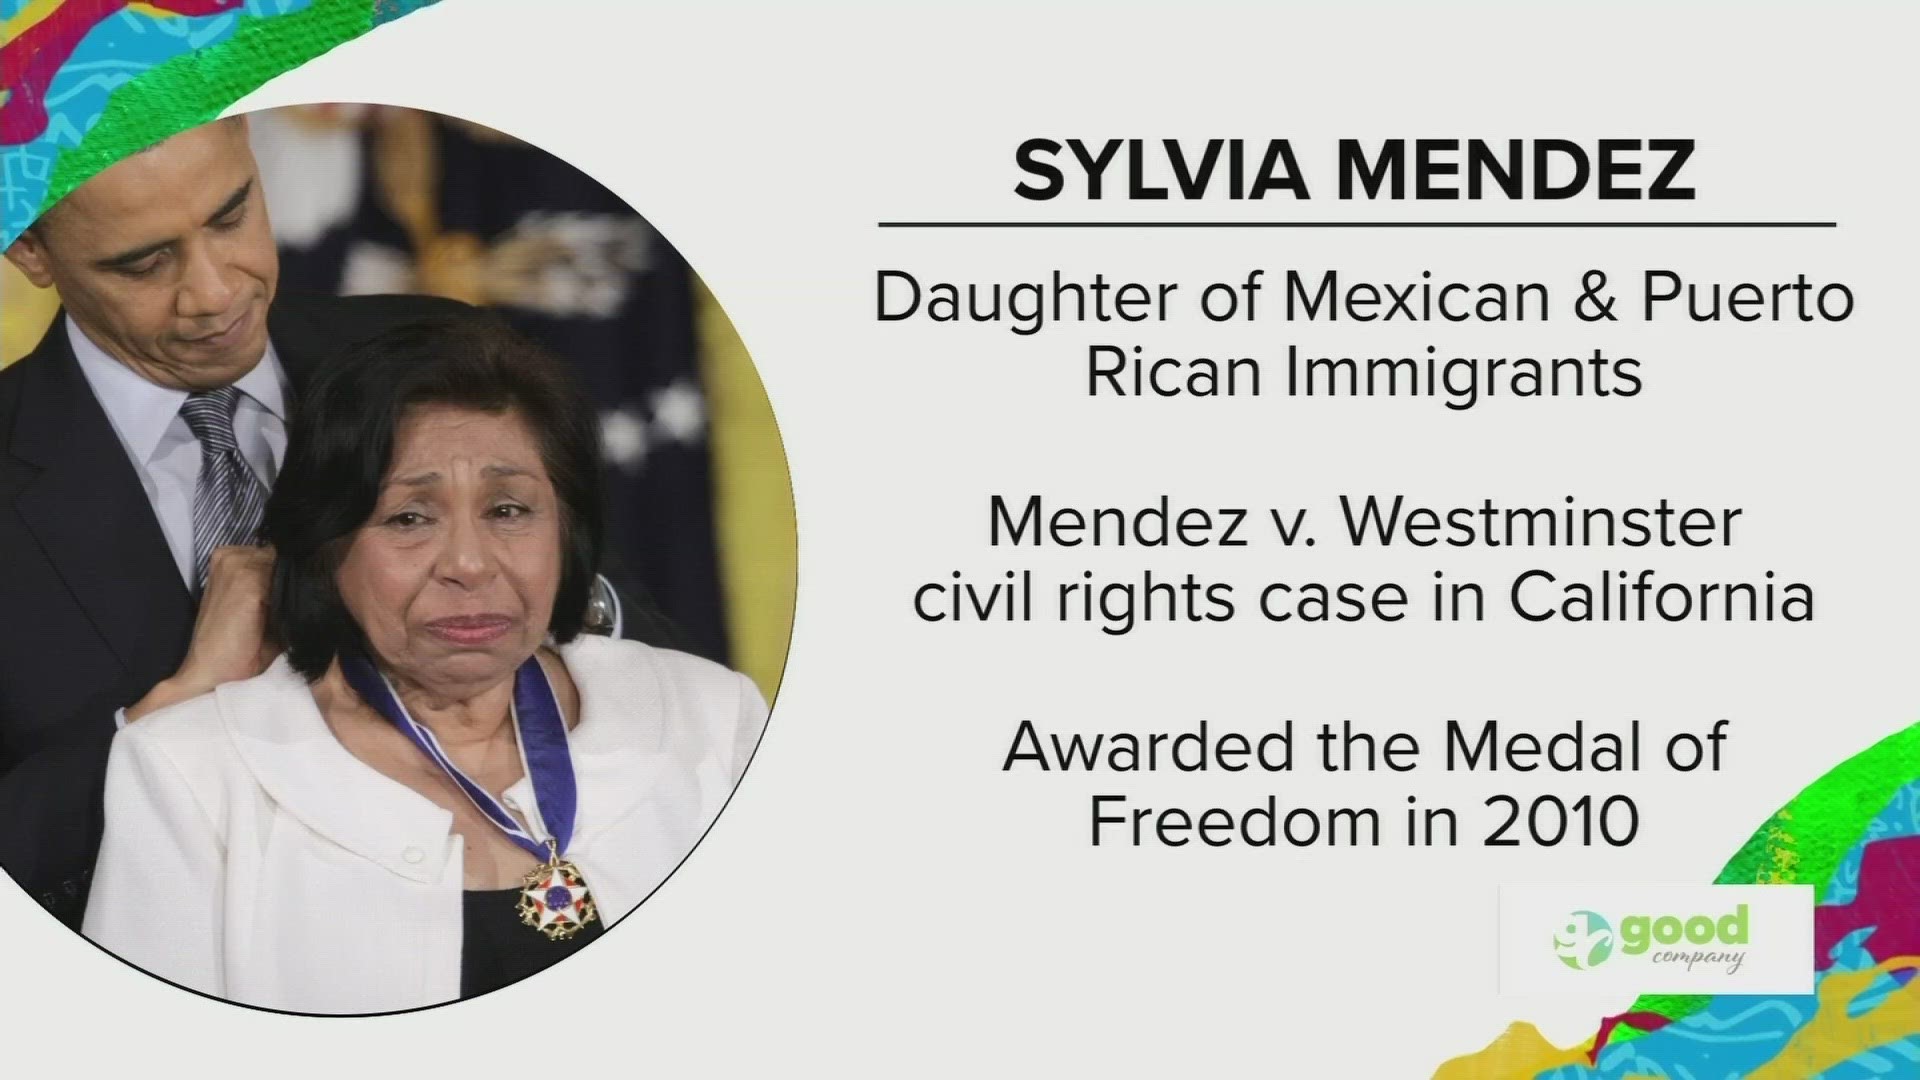 Hollie tells us about Sylvia Mendez, who was the center of a landmark 1946 decision regarding school desegregation.